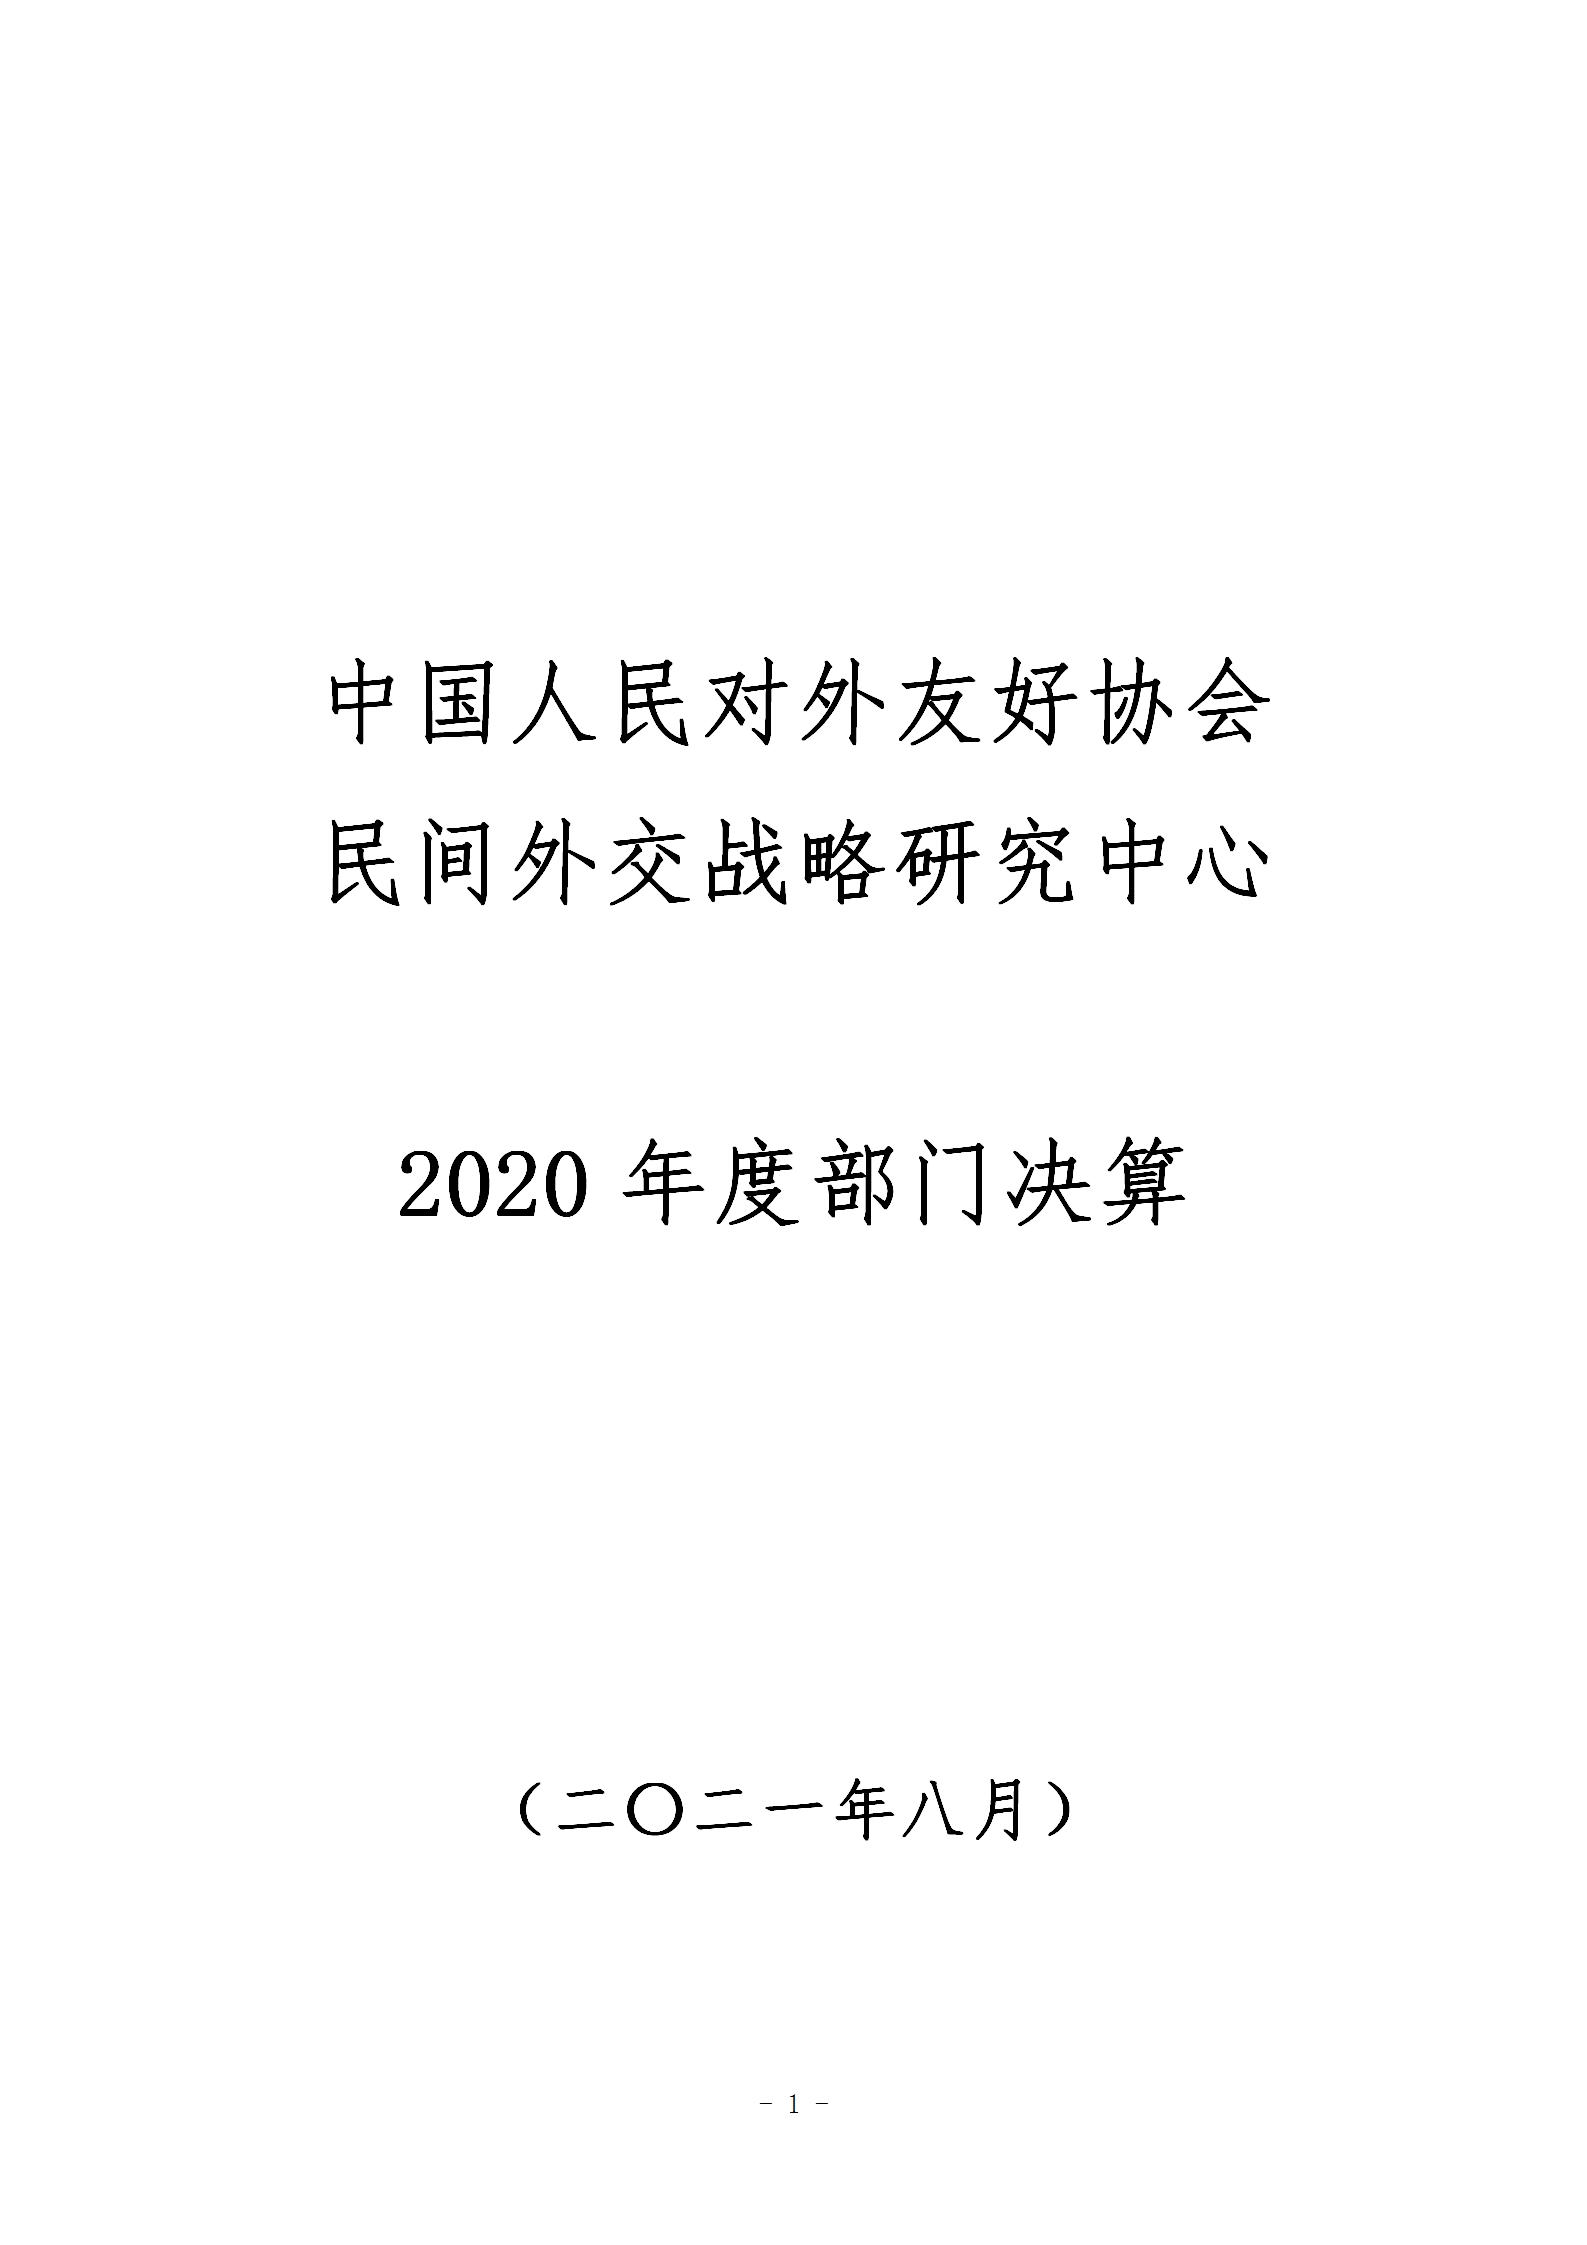 188bet亚洲民间外交战略研究中心2020年度部门决算_01.jpg